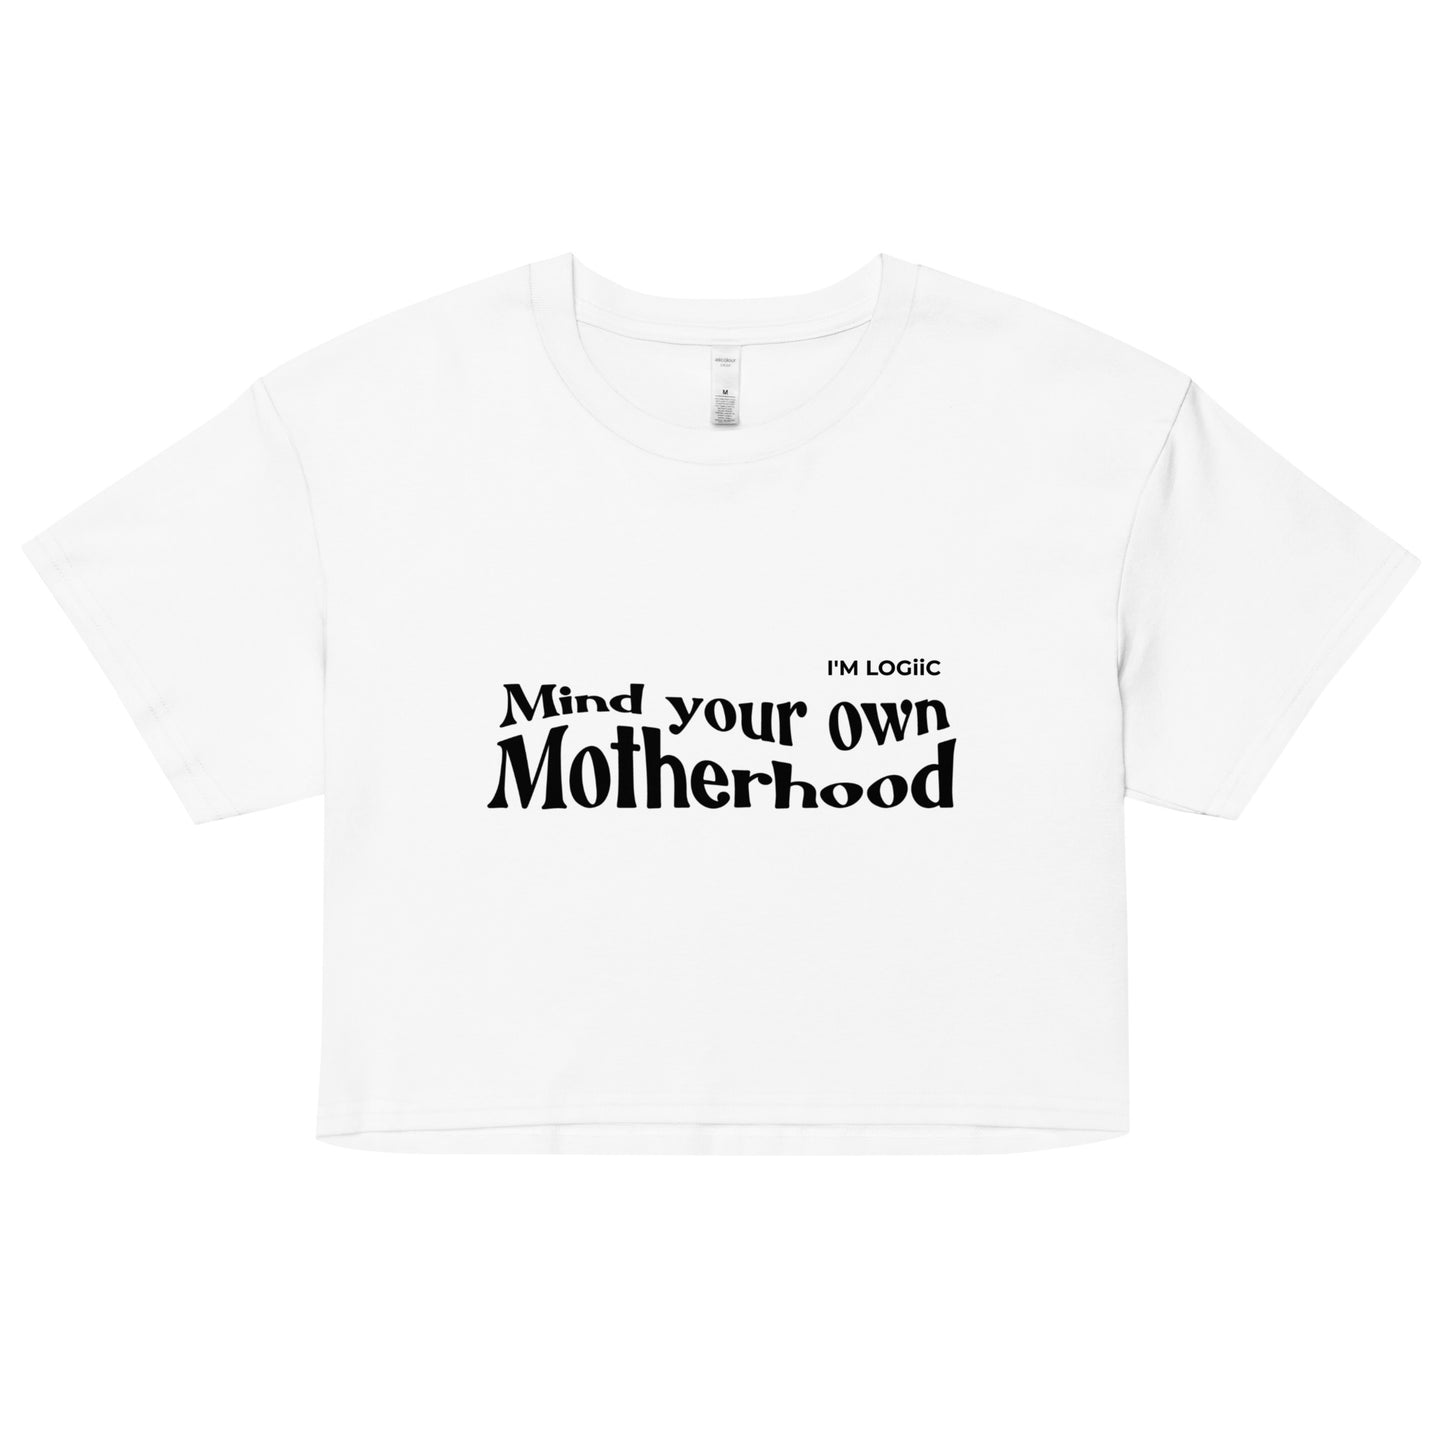 Motherhood Women’s crop top - Shirts & Tops